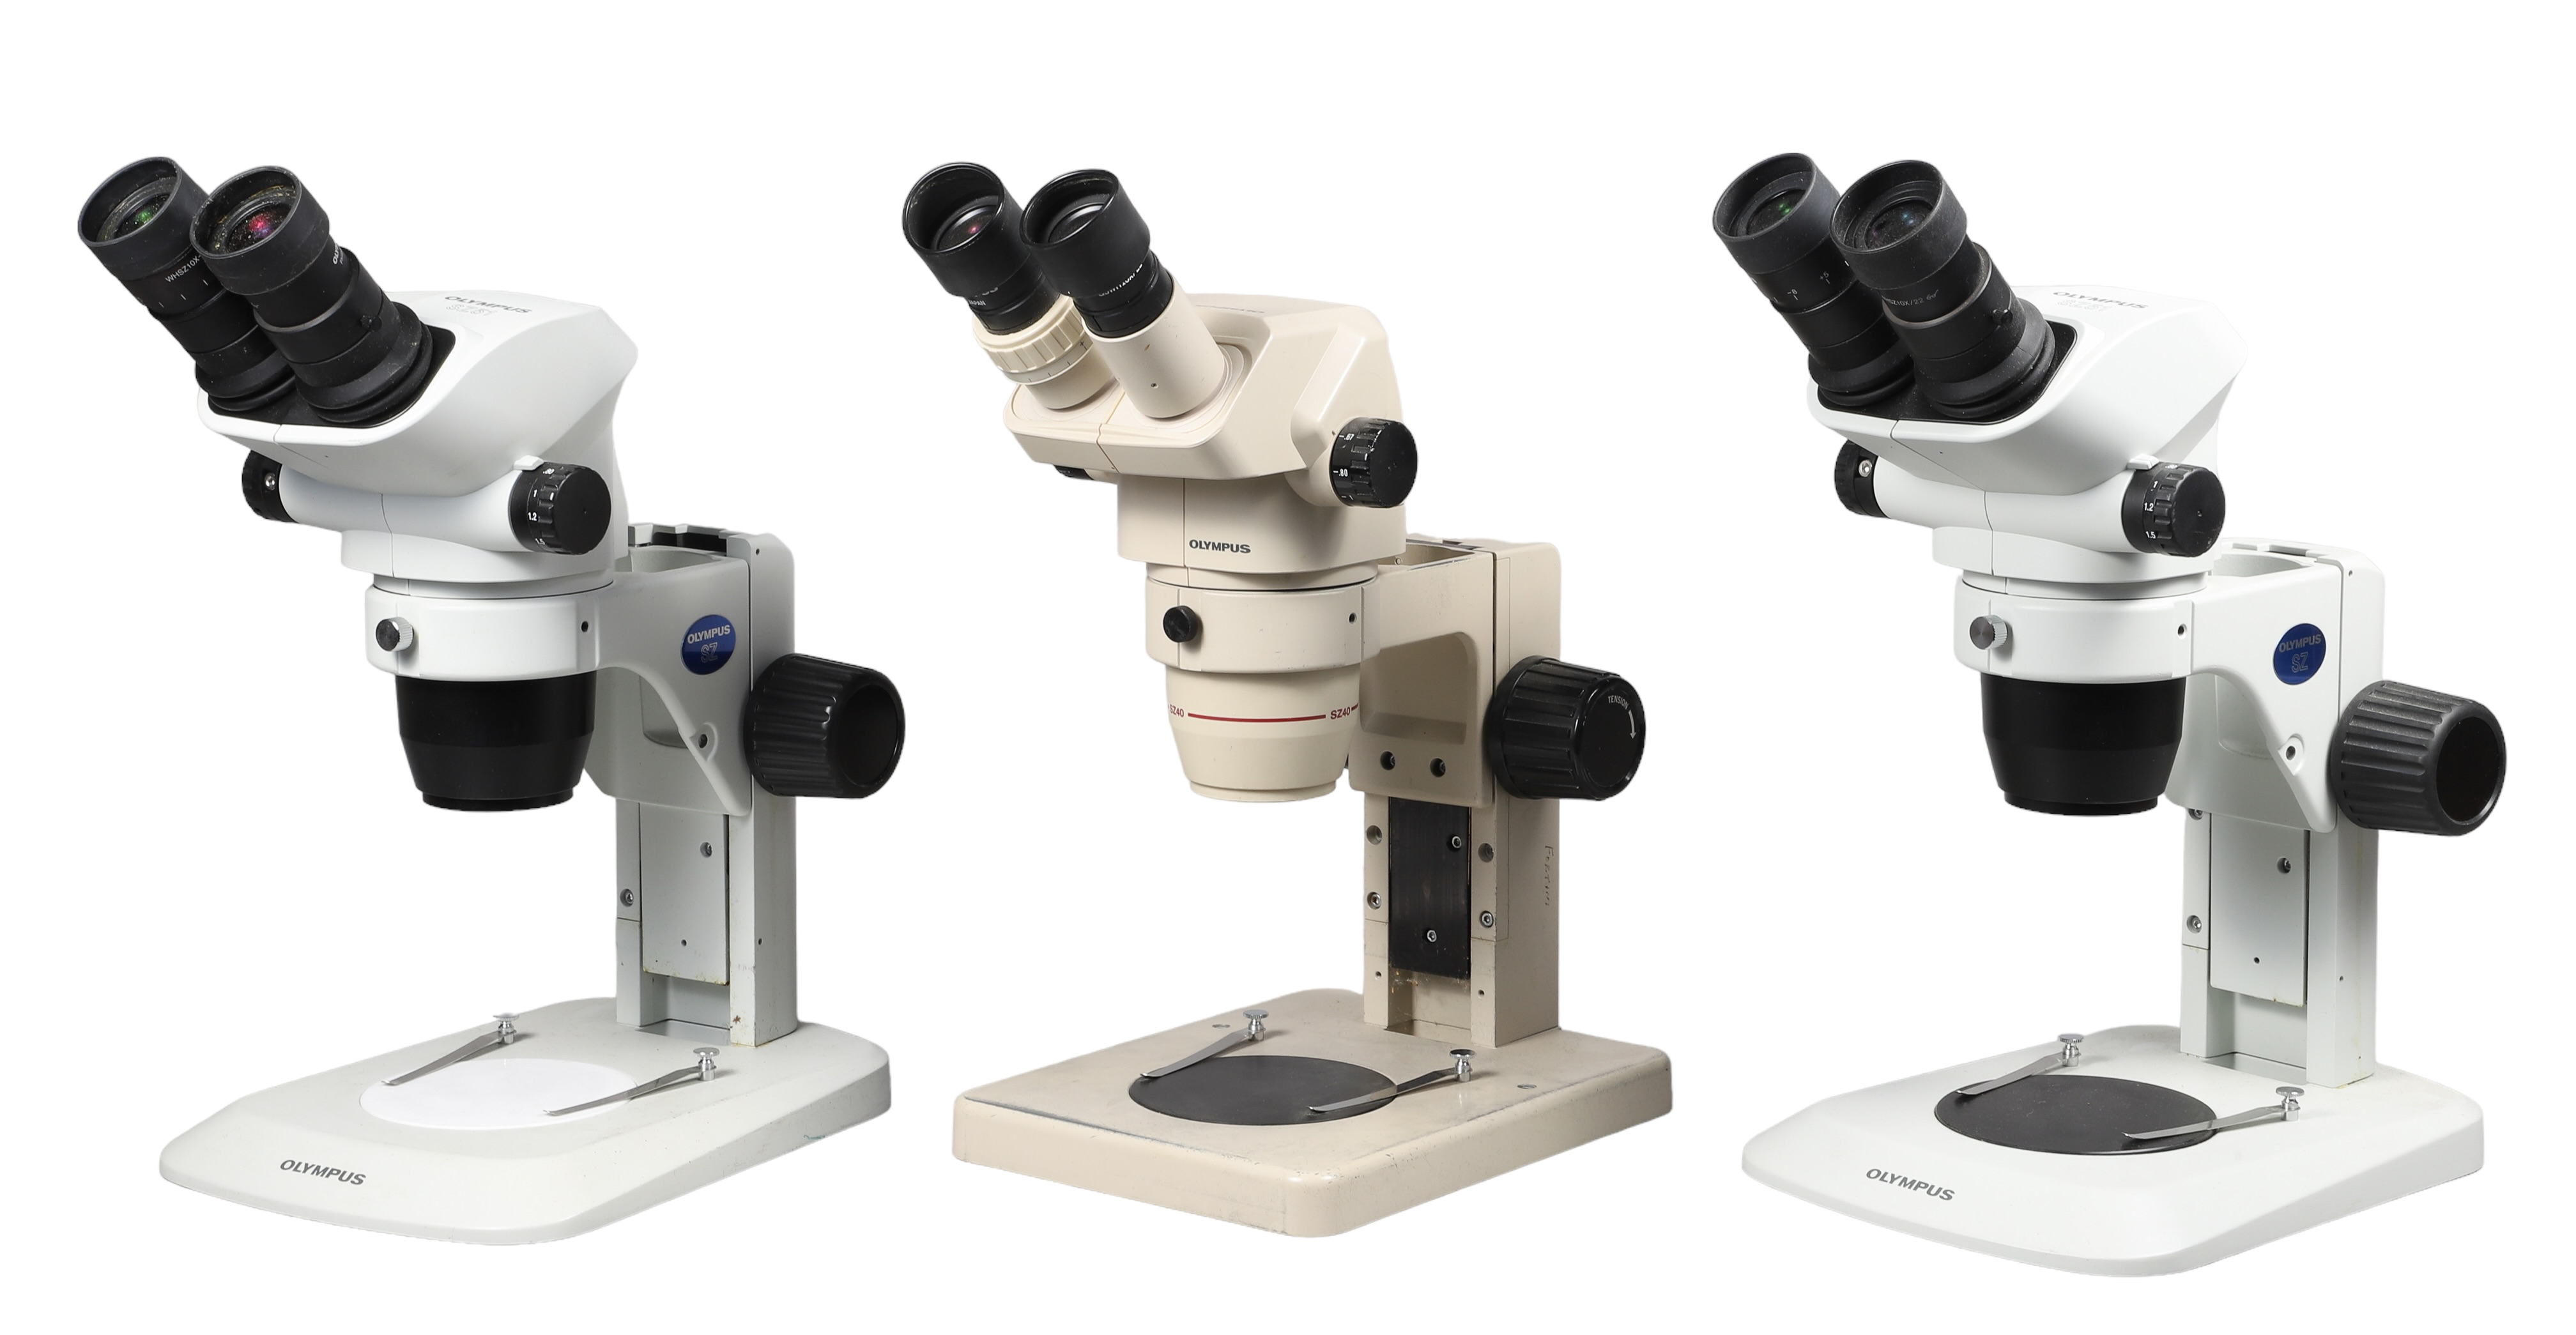  3 Olympus stereo microscopes  317fcd